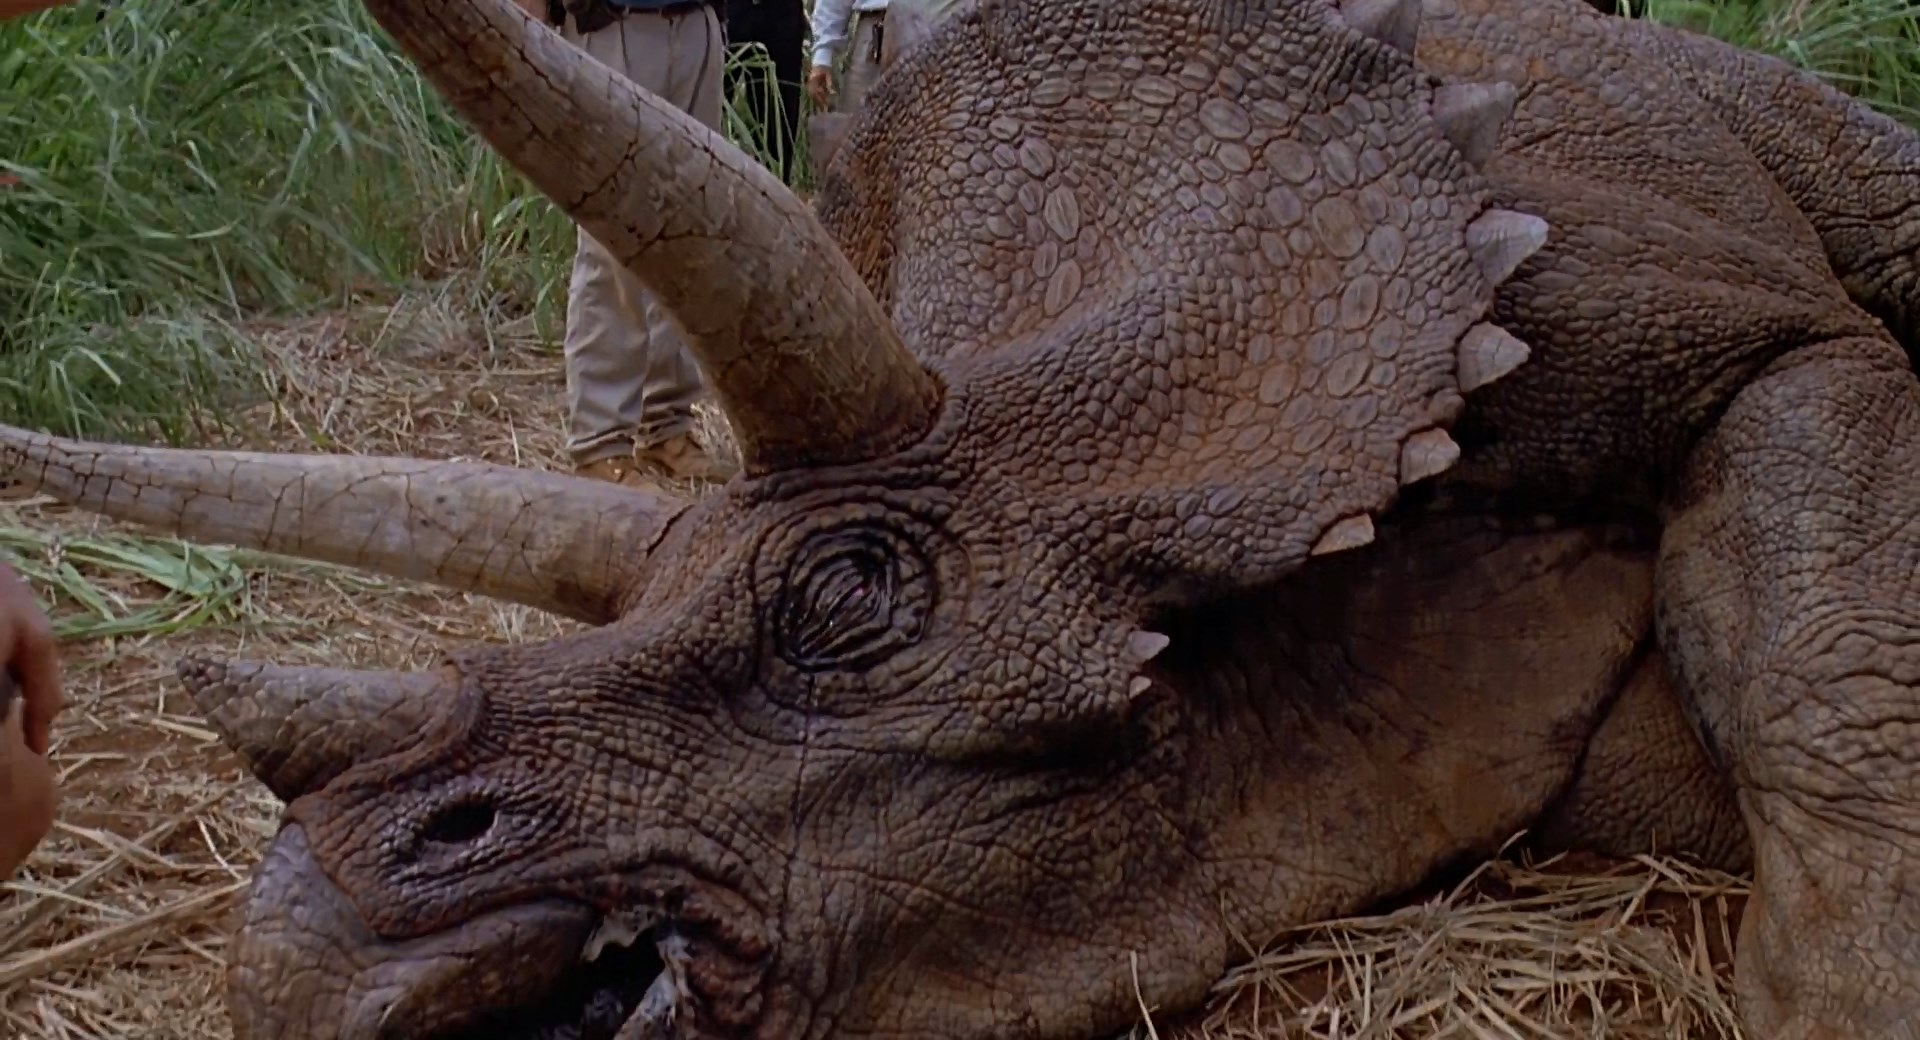 Jurrasic Park Triceratops Skull